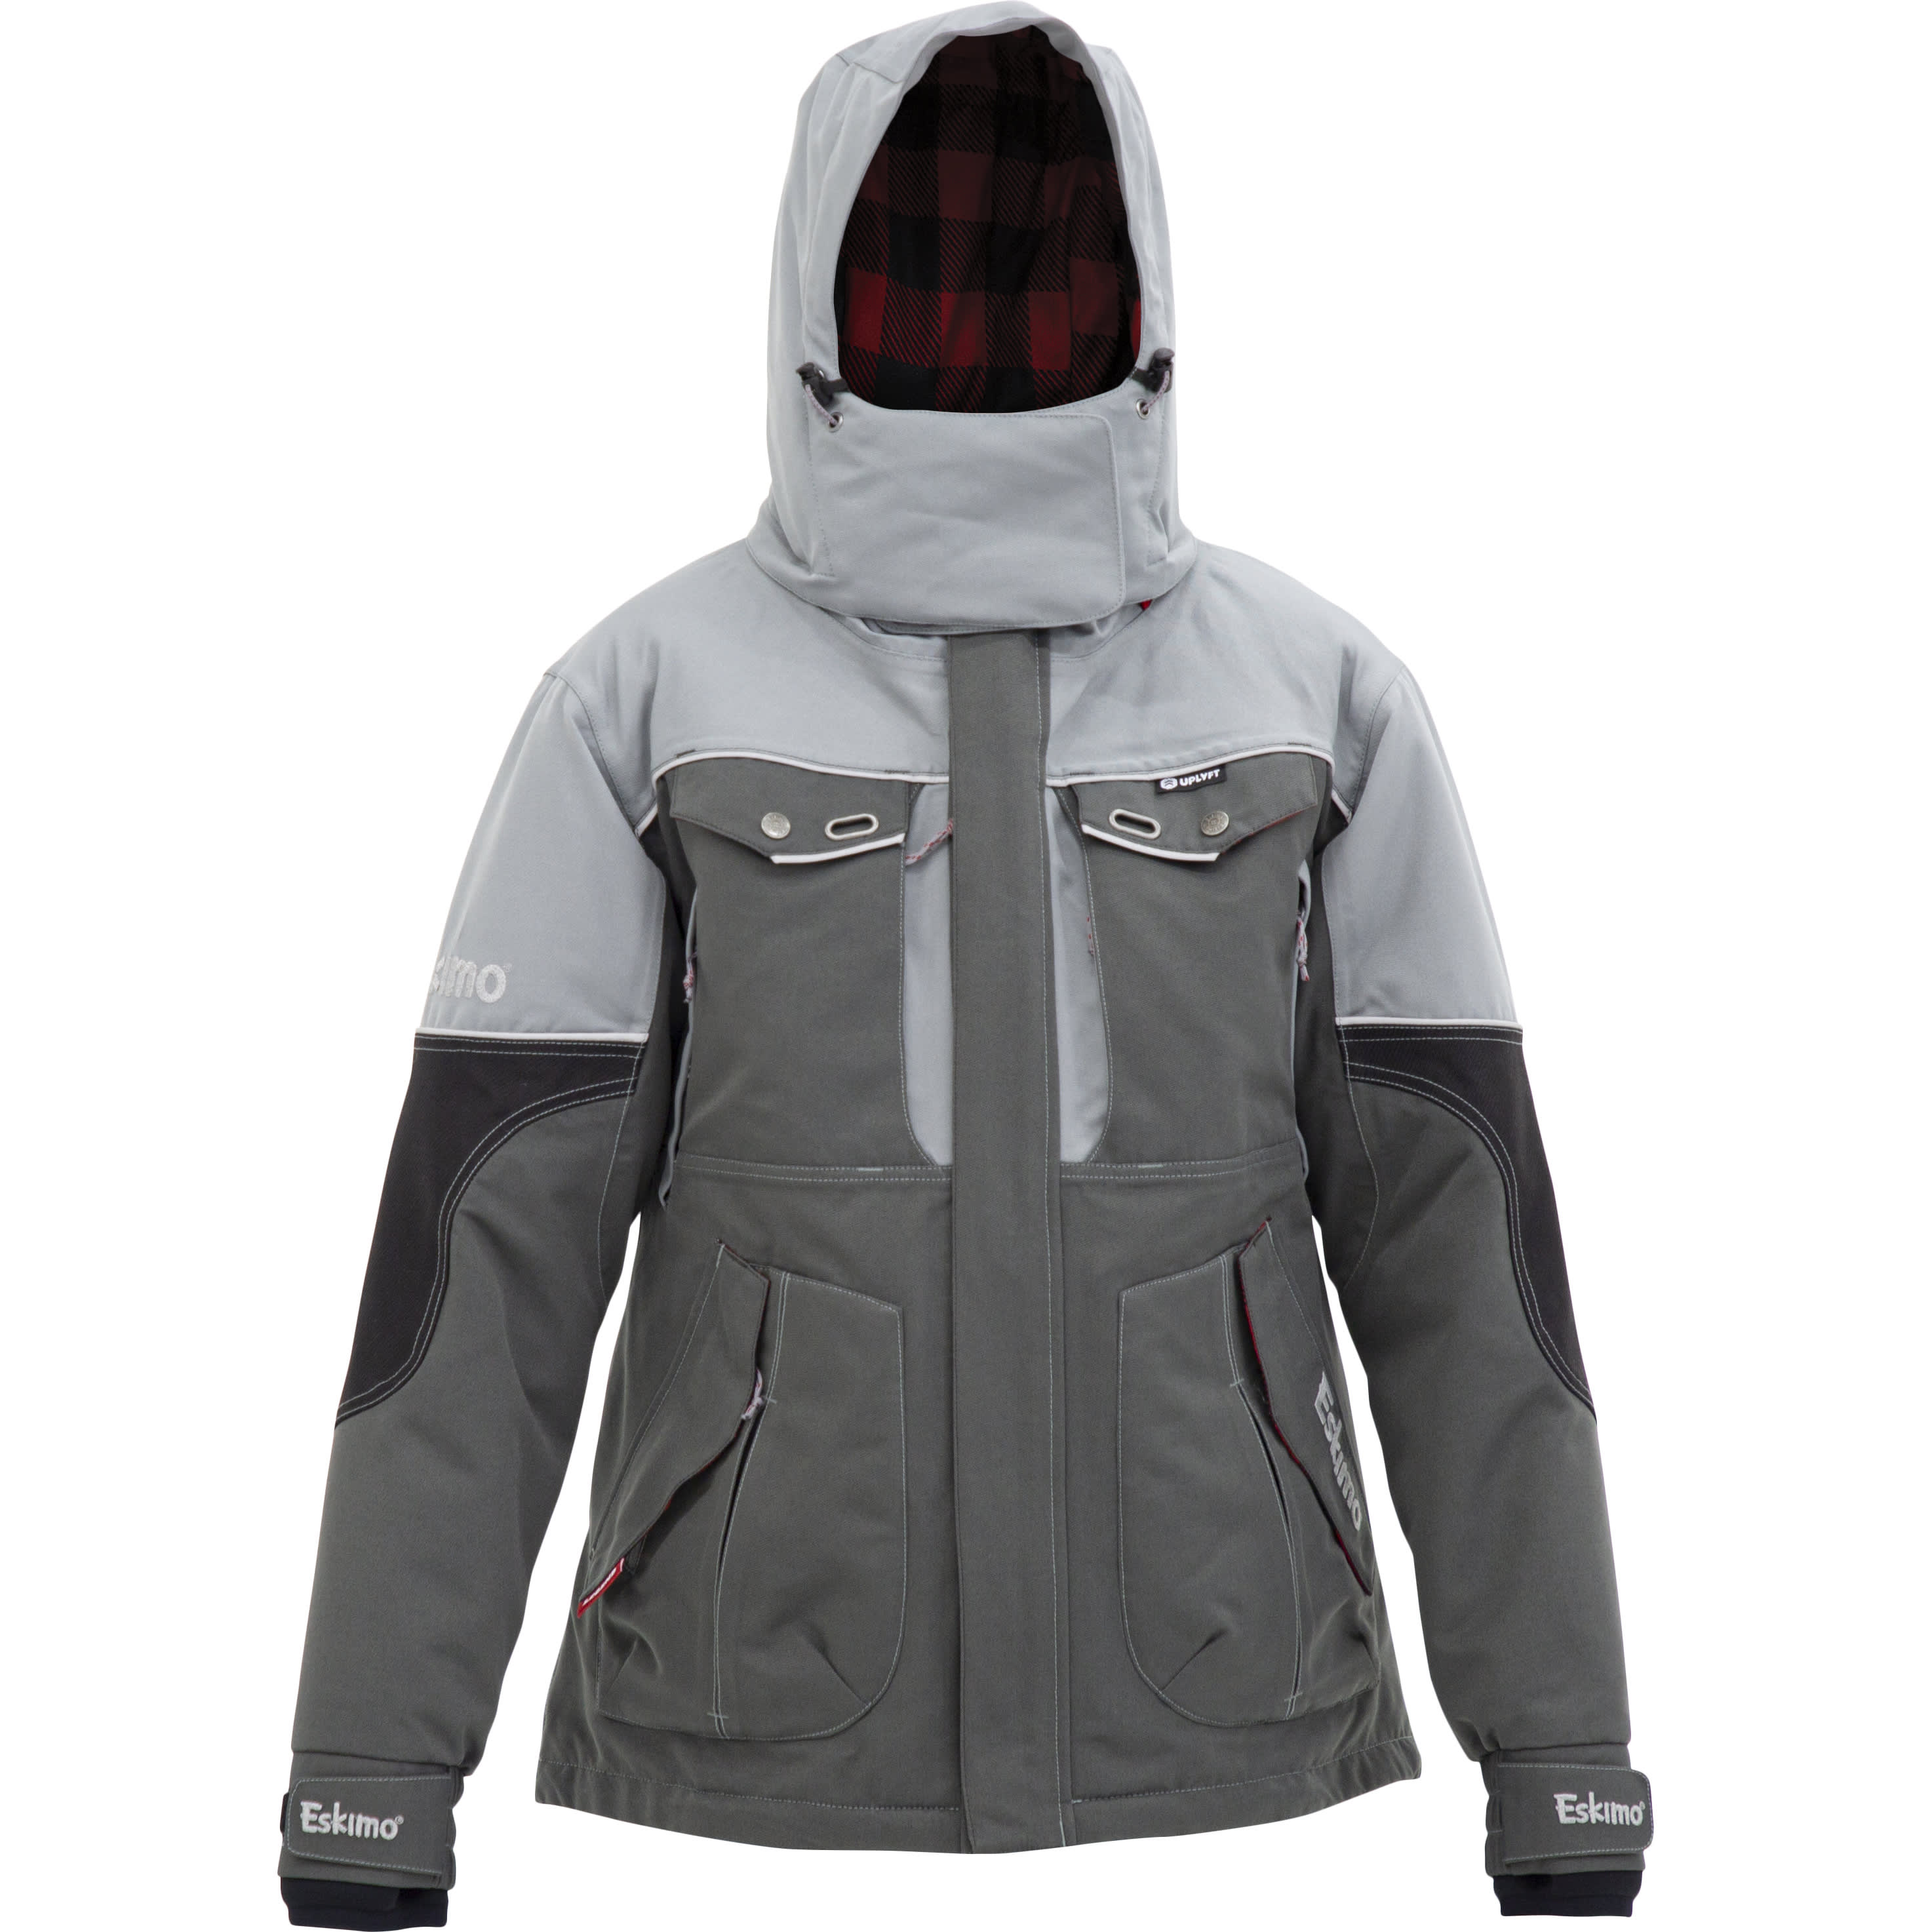 Columbia™ Women's Joy Peak™ Omni-Heat™ Infinity Insulated Hooded Jacket